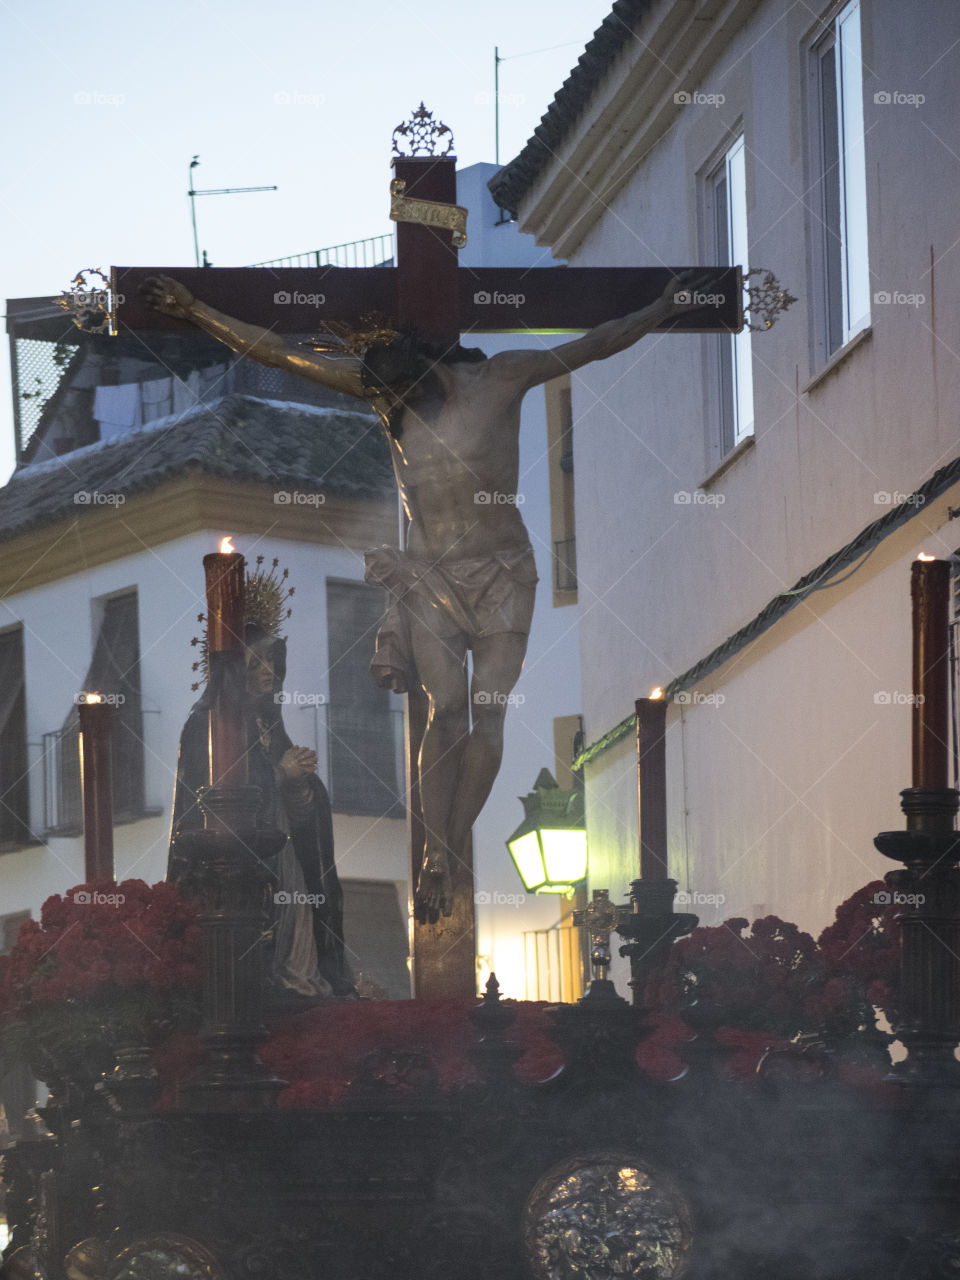 Spiritual traditions fill the street of Cordoba